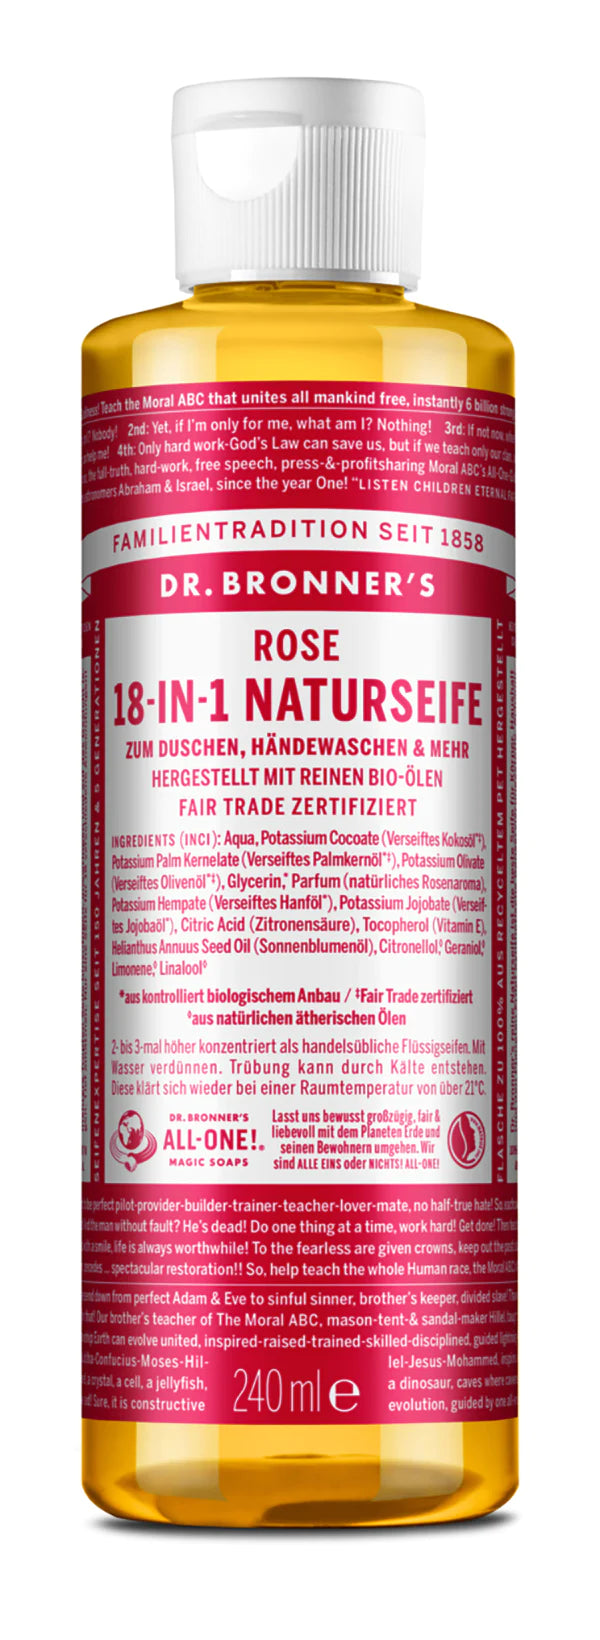 Dr. Bronner - 18-IN-1 NATURSEIFE Rose 240 ml